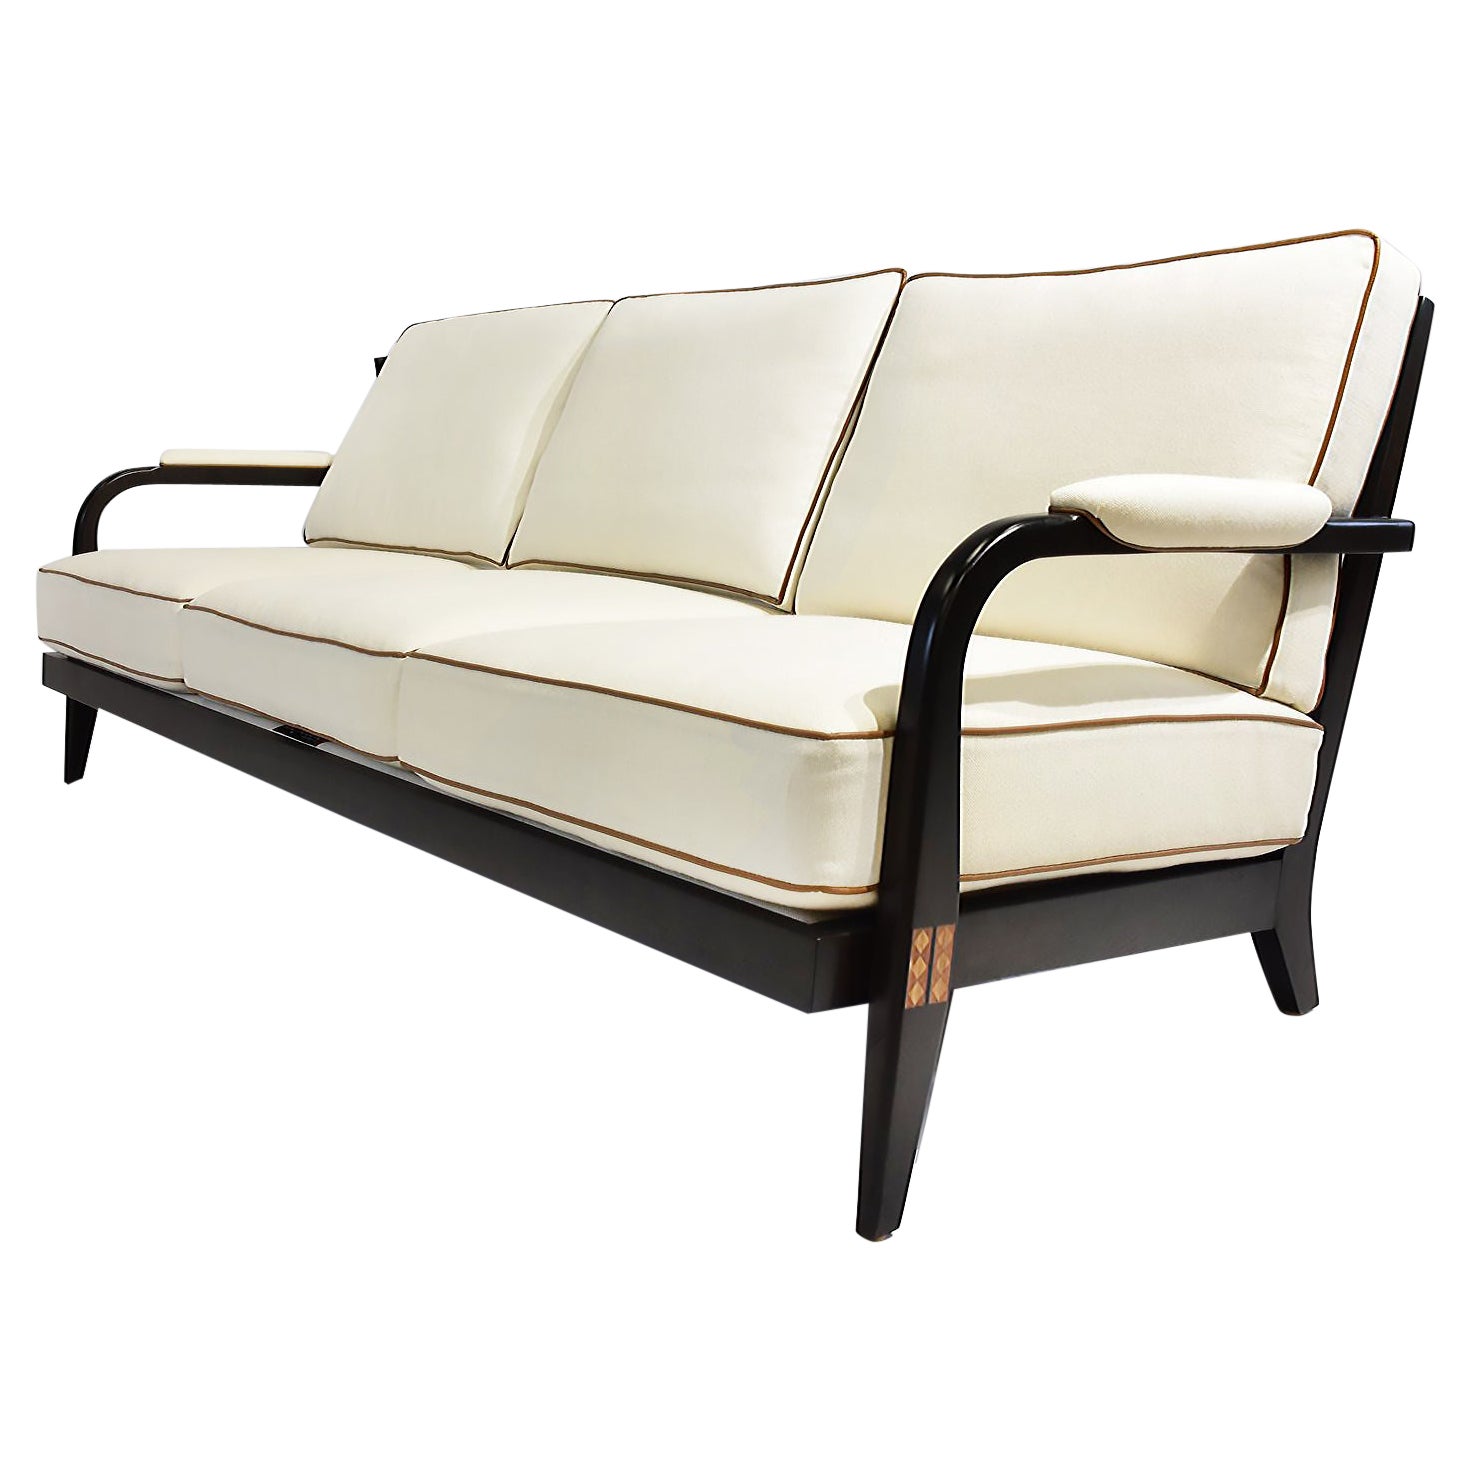 Le June Upholstery 3 Seat Club Havana Sofa Floor Model, Walnut Finished Mahogany For Sale